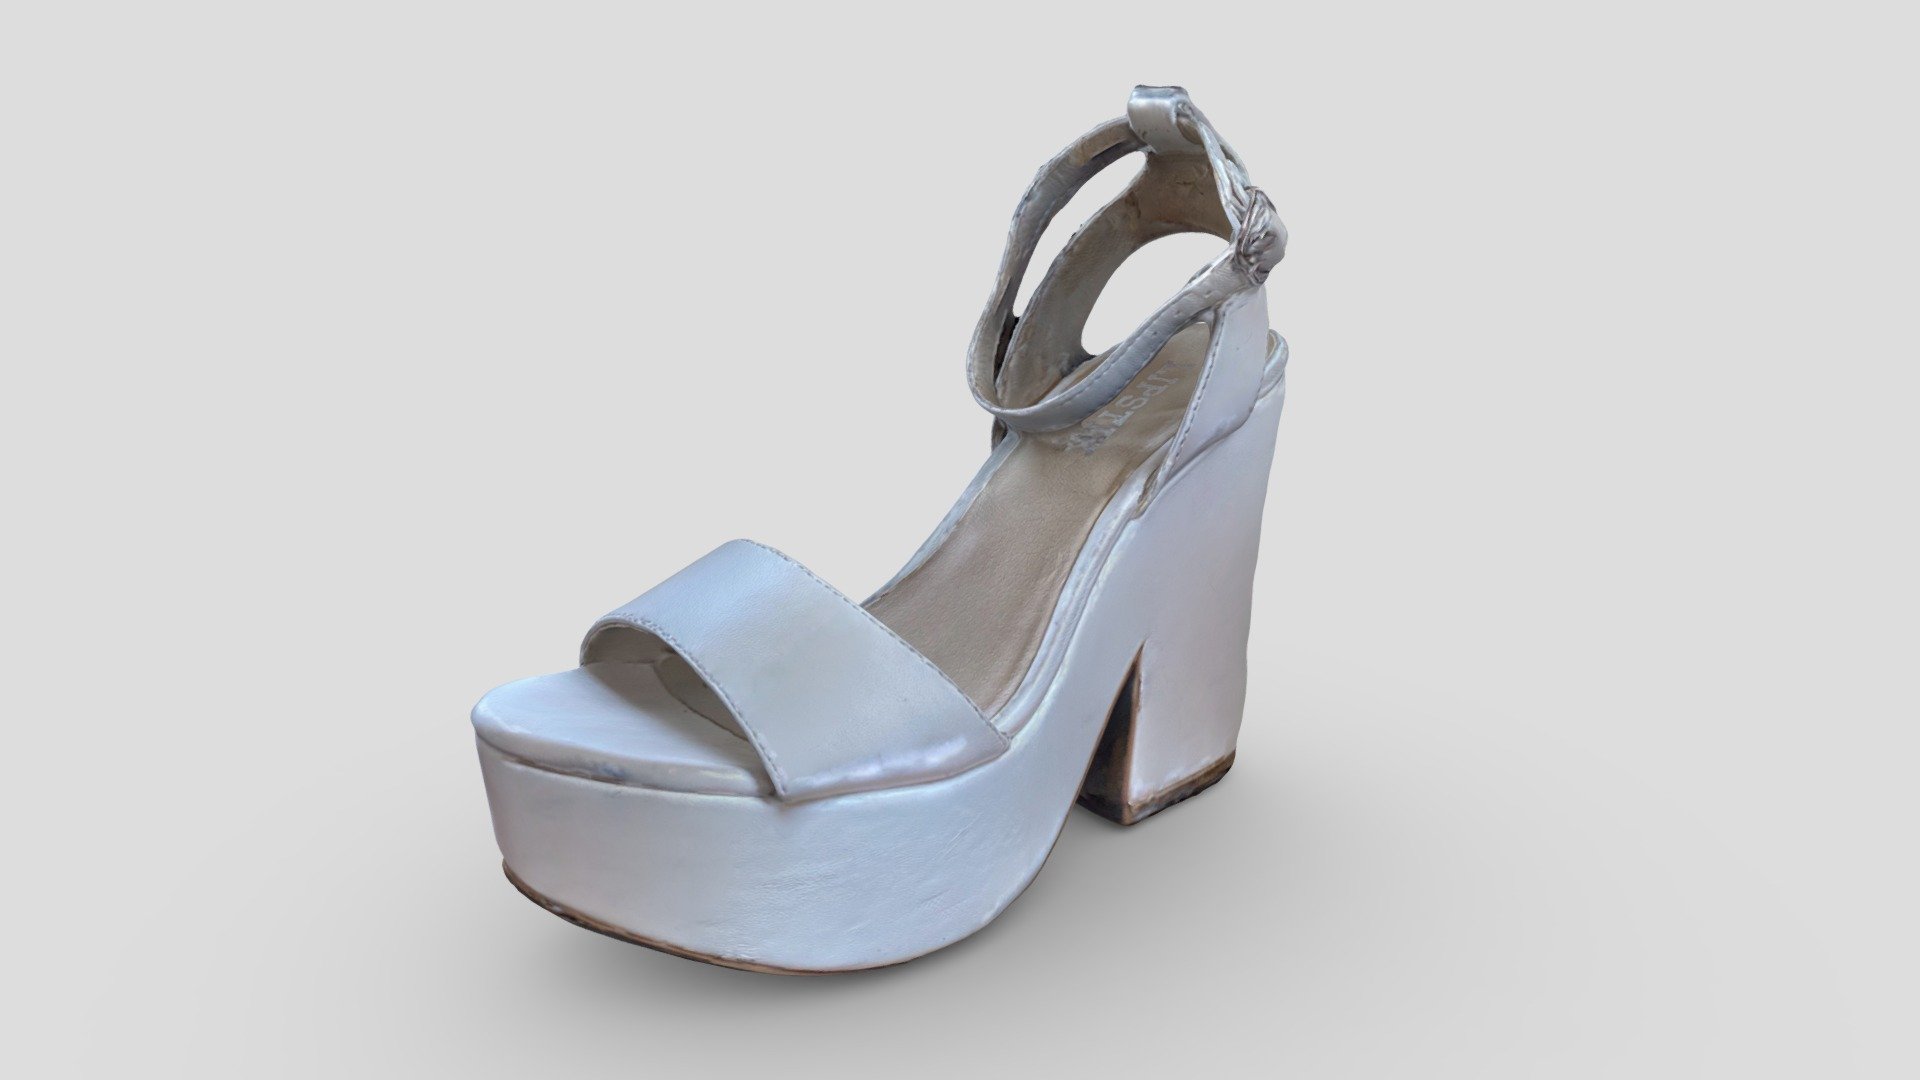 3D scan of white platform sandals - Lipstik brand.

Created with Polycam - Platform Sandals - Lipstik 3D scan - Download Free 3D model by jkyfk 3d model